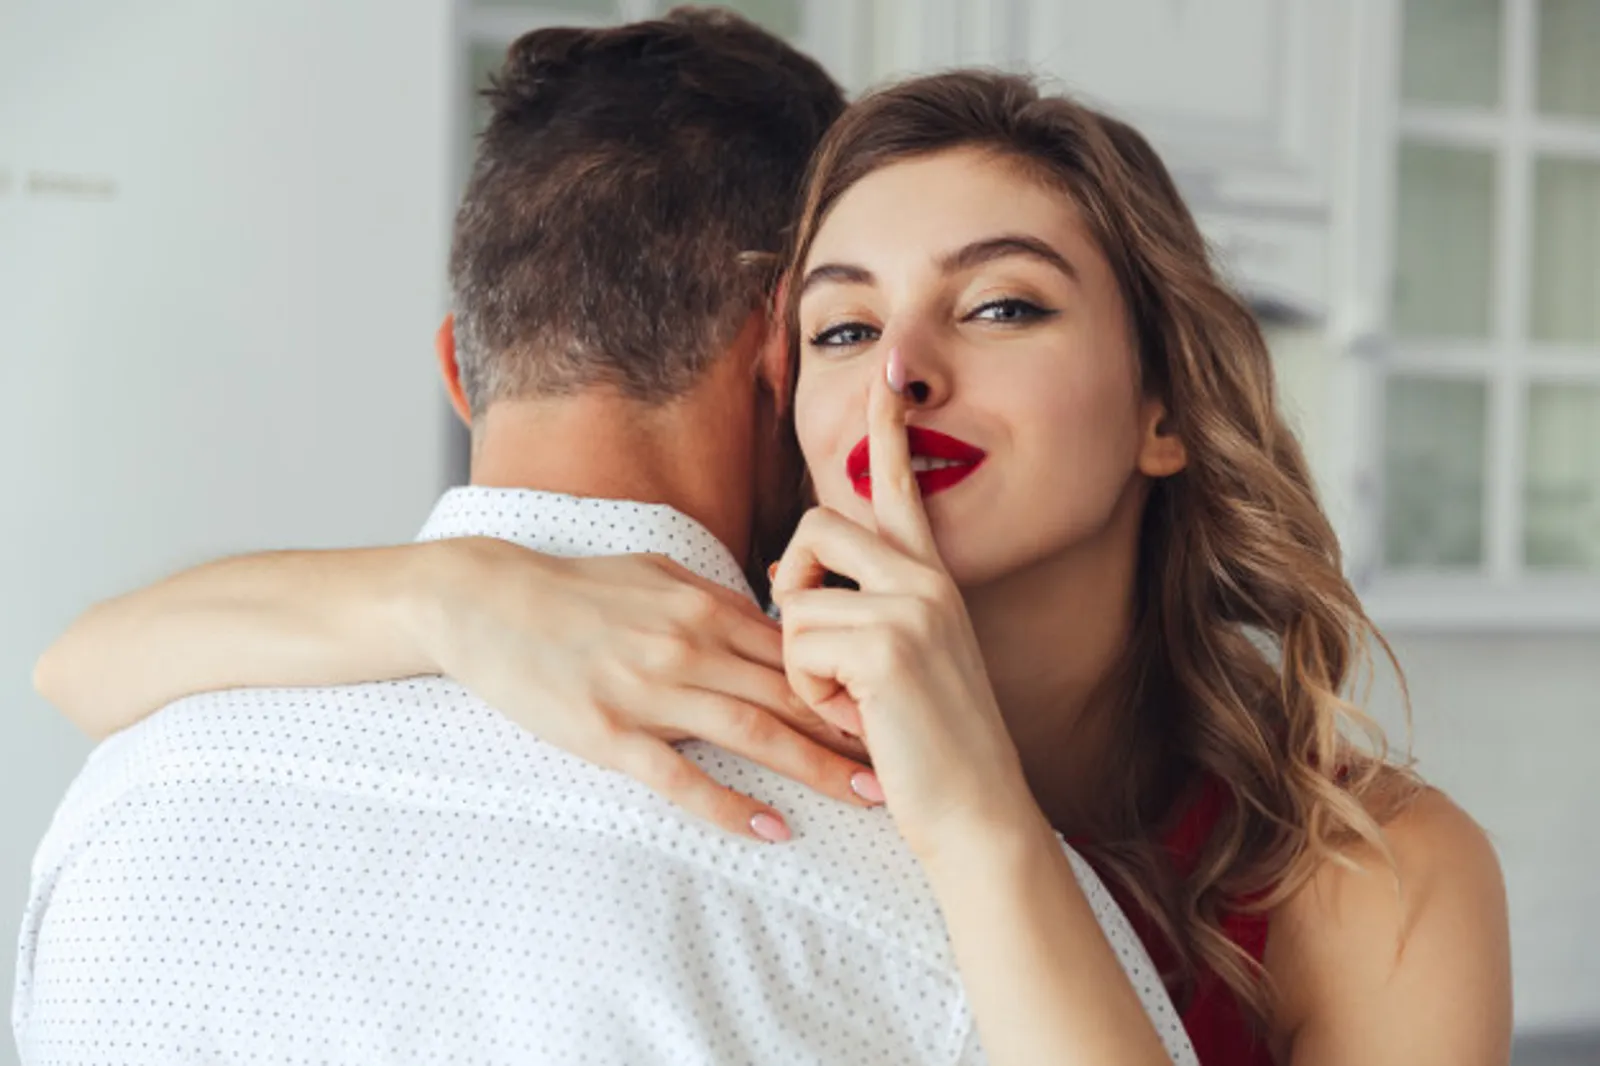 7 Cara Mudah Agar Hubunganmu Langgeng dengan Laki-laki Aries